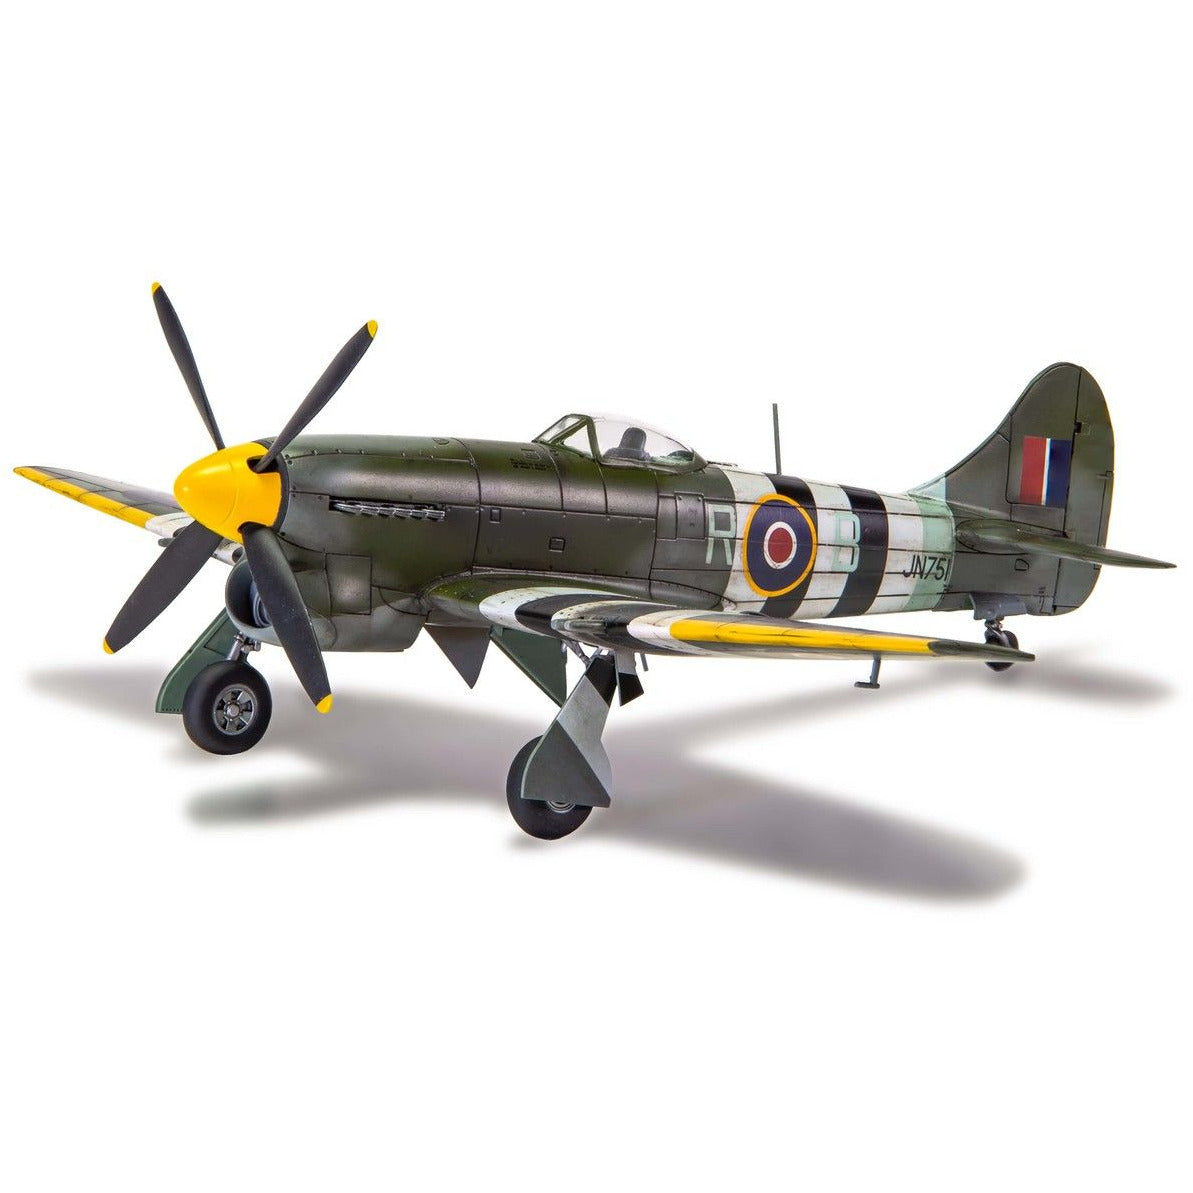 AIRFIX 1/72 Hawker Tempest Mk.V